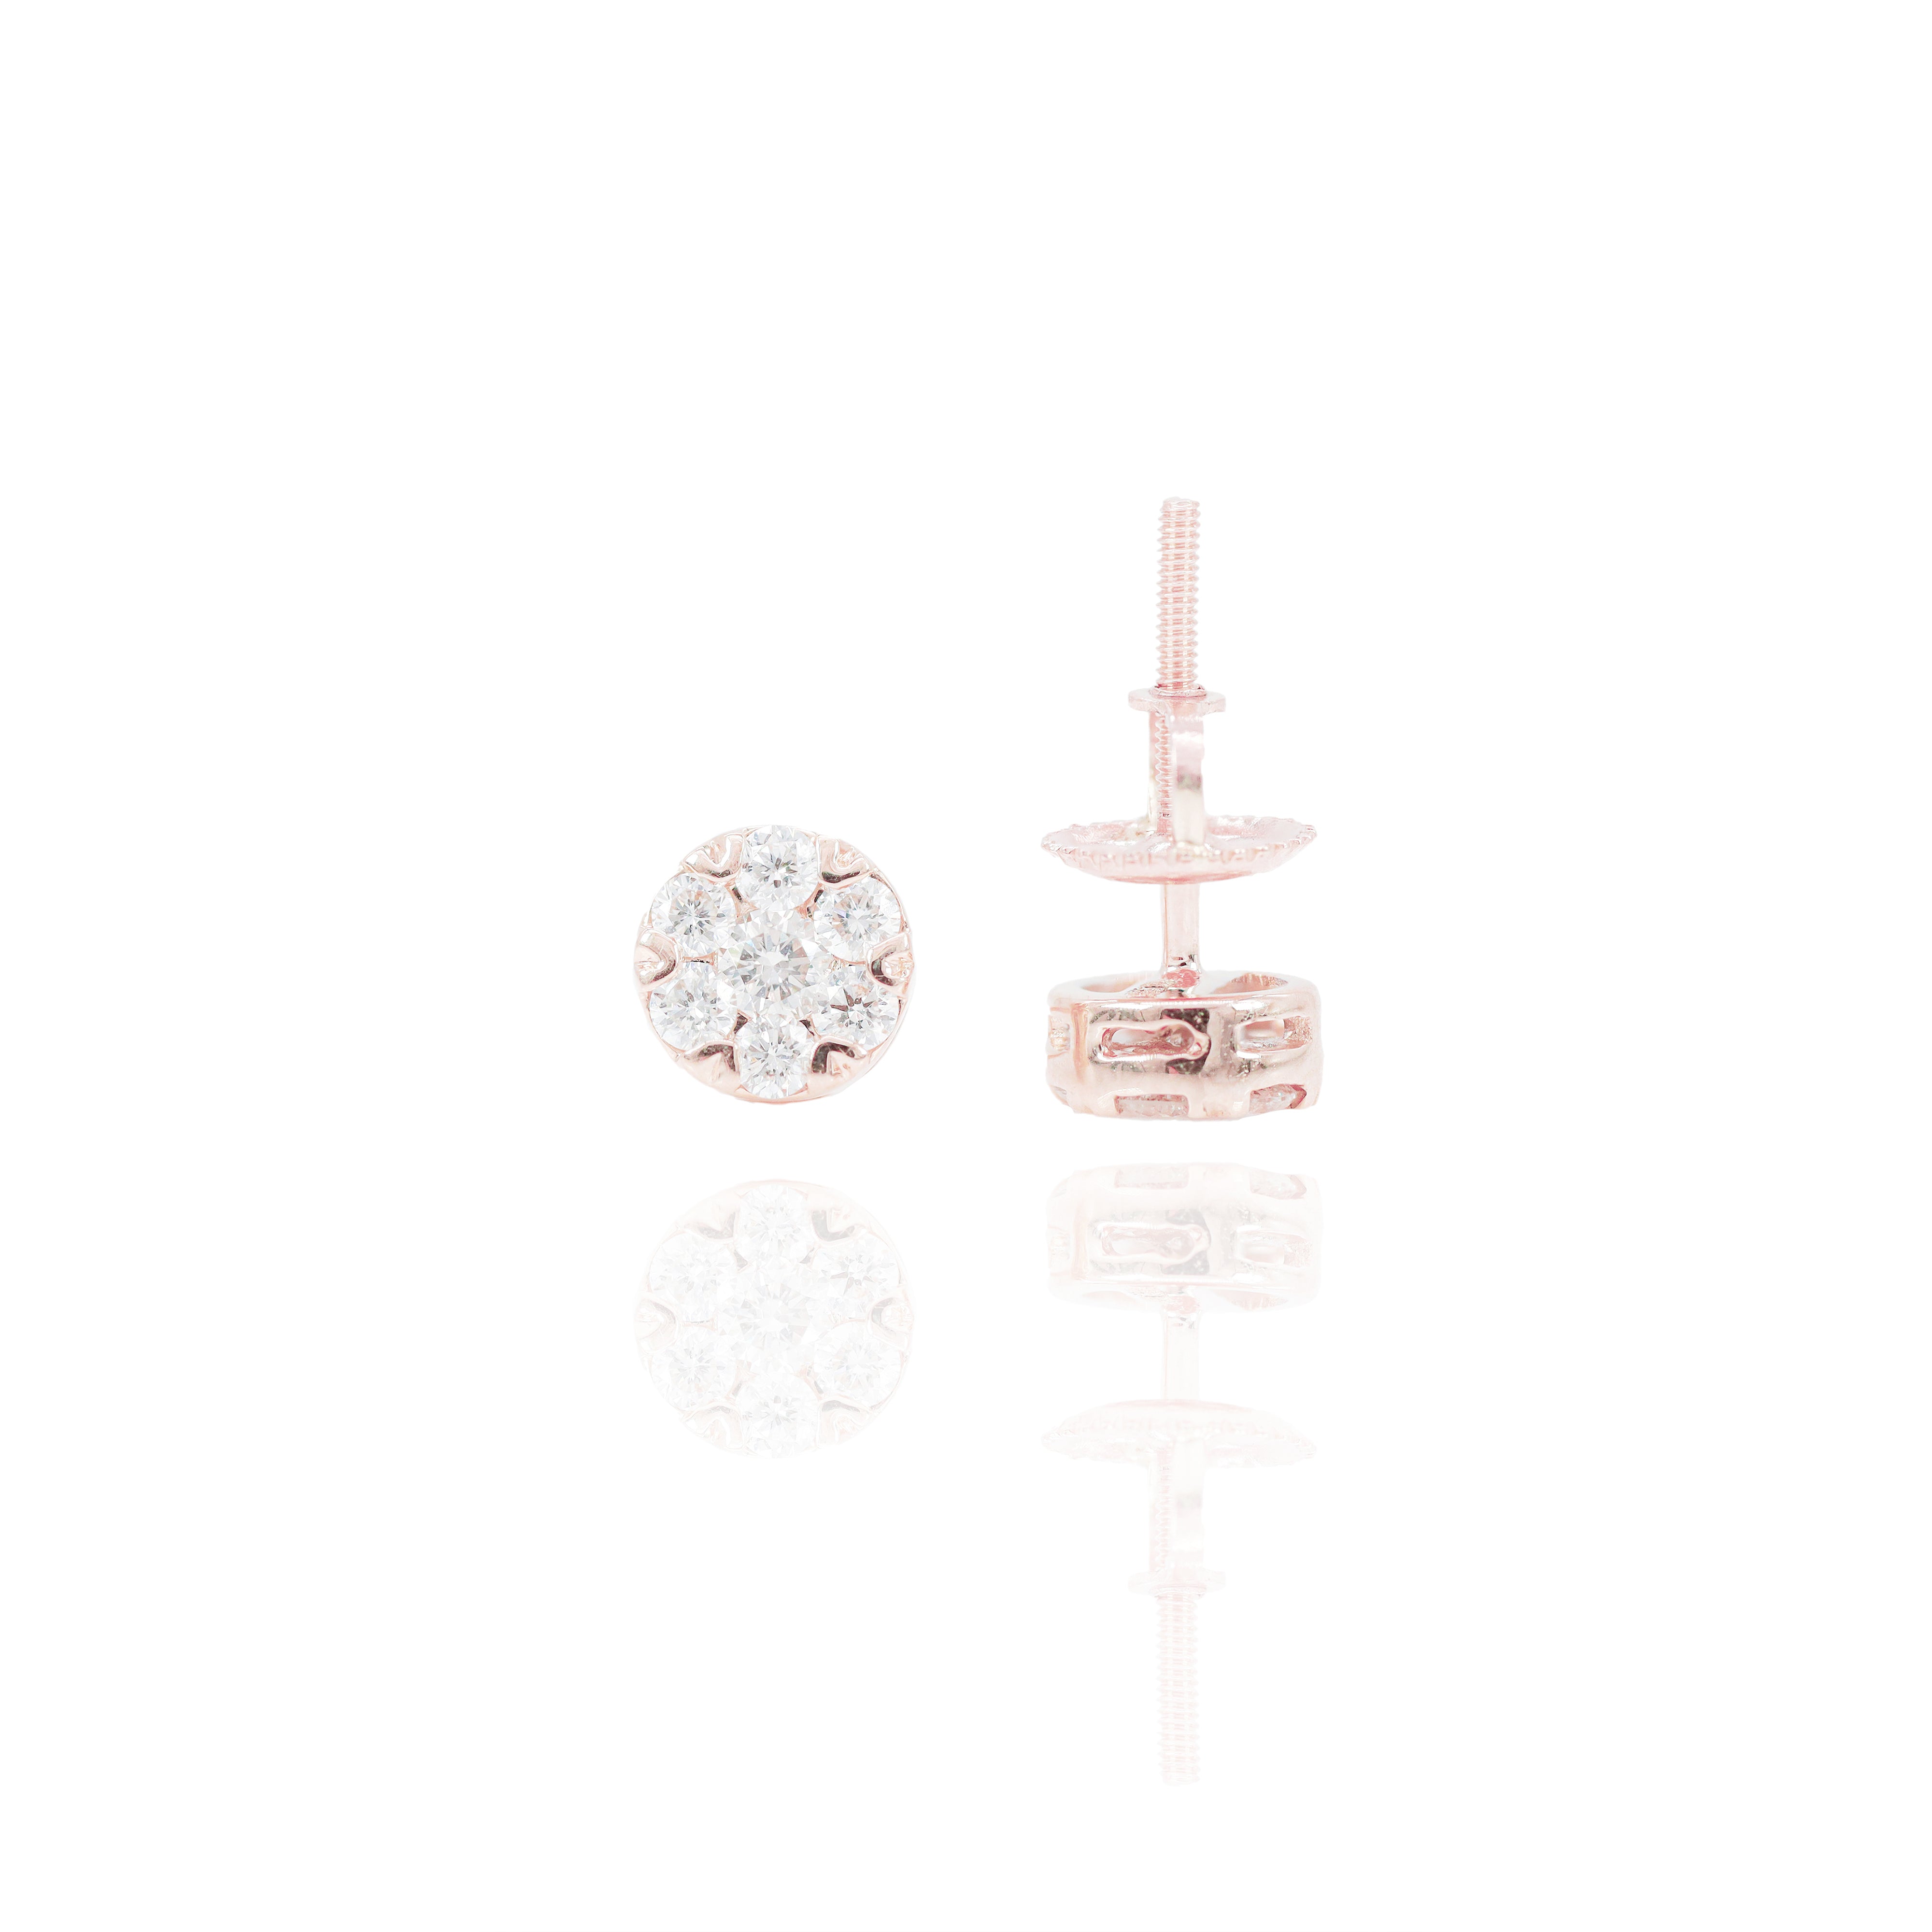 6 Prong Round Flower Style Diamond Earrings